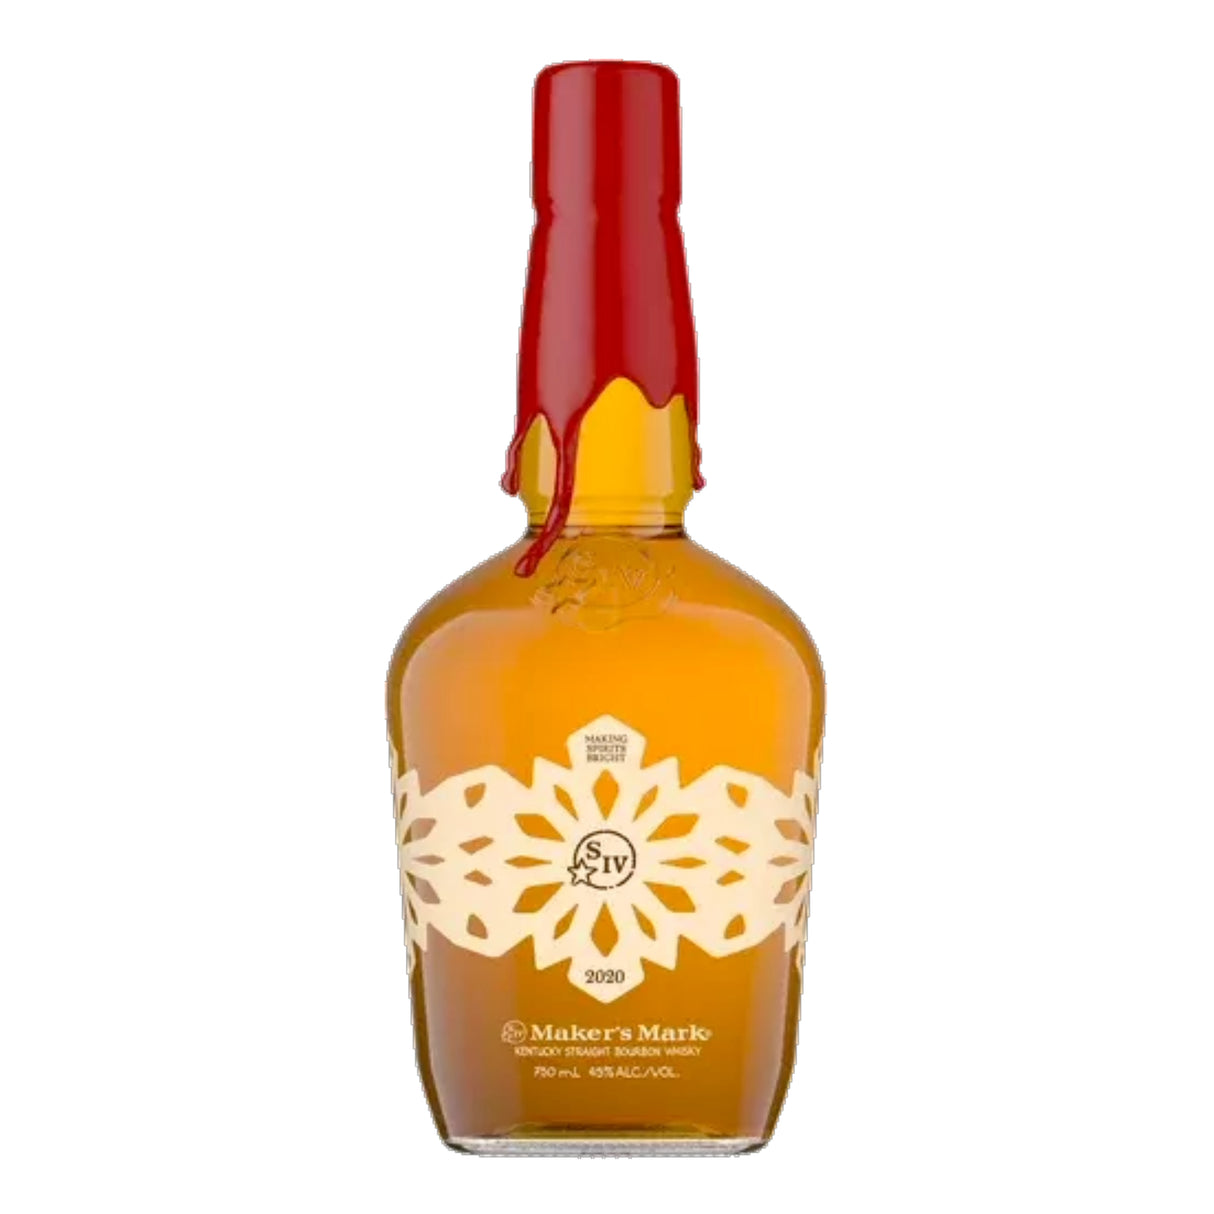 Maker's Mark Holiday Edition Kentucky Straight Bourbon Whiskey 2020